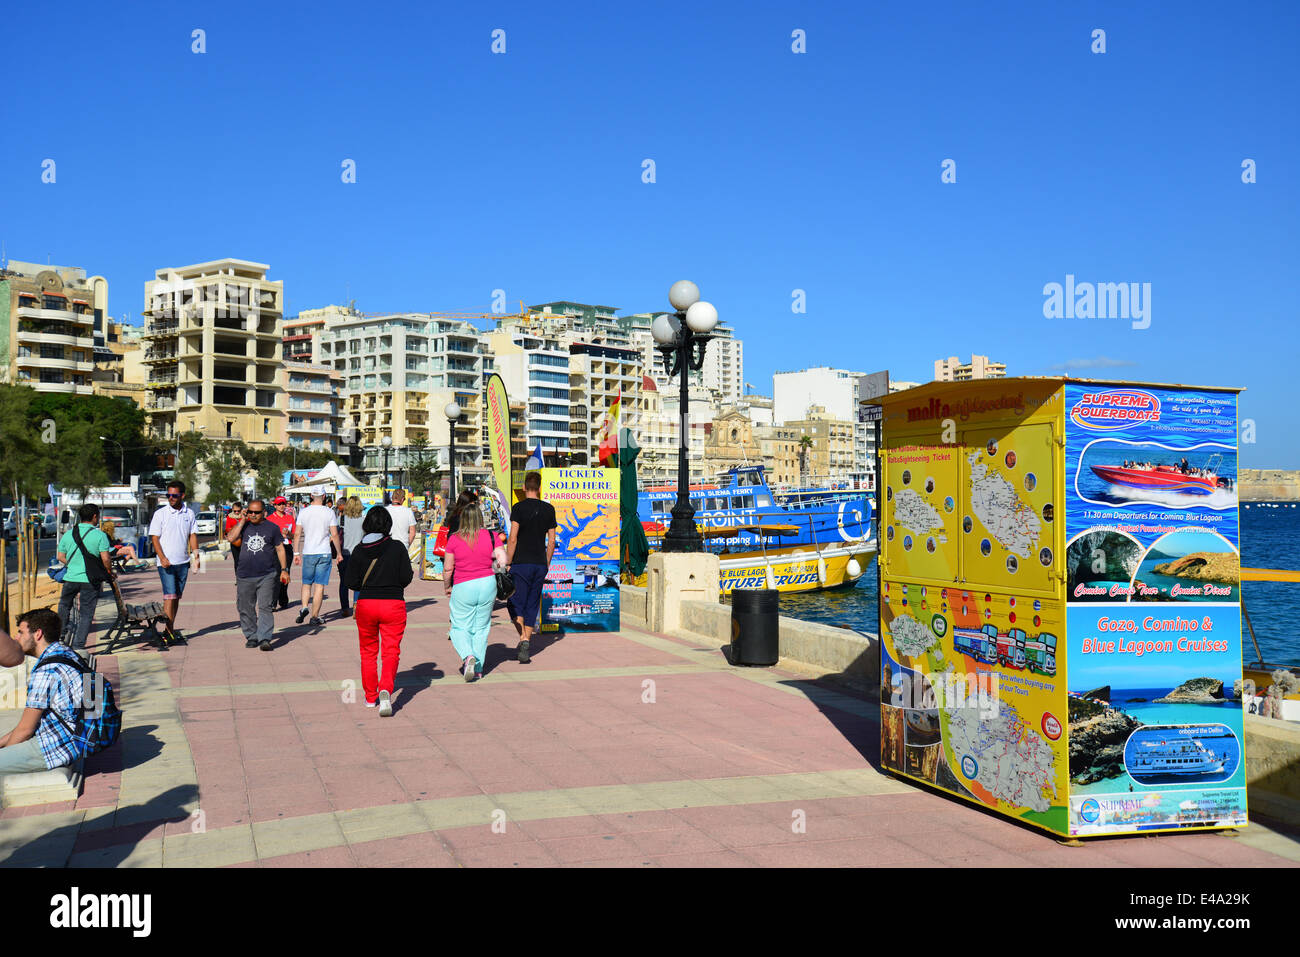 Seafront promenade, Sliema (Tas-Sliema), Northern Harbour District, Malta Xlokk Region, Republic of Malta Stock Photo